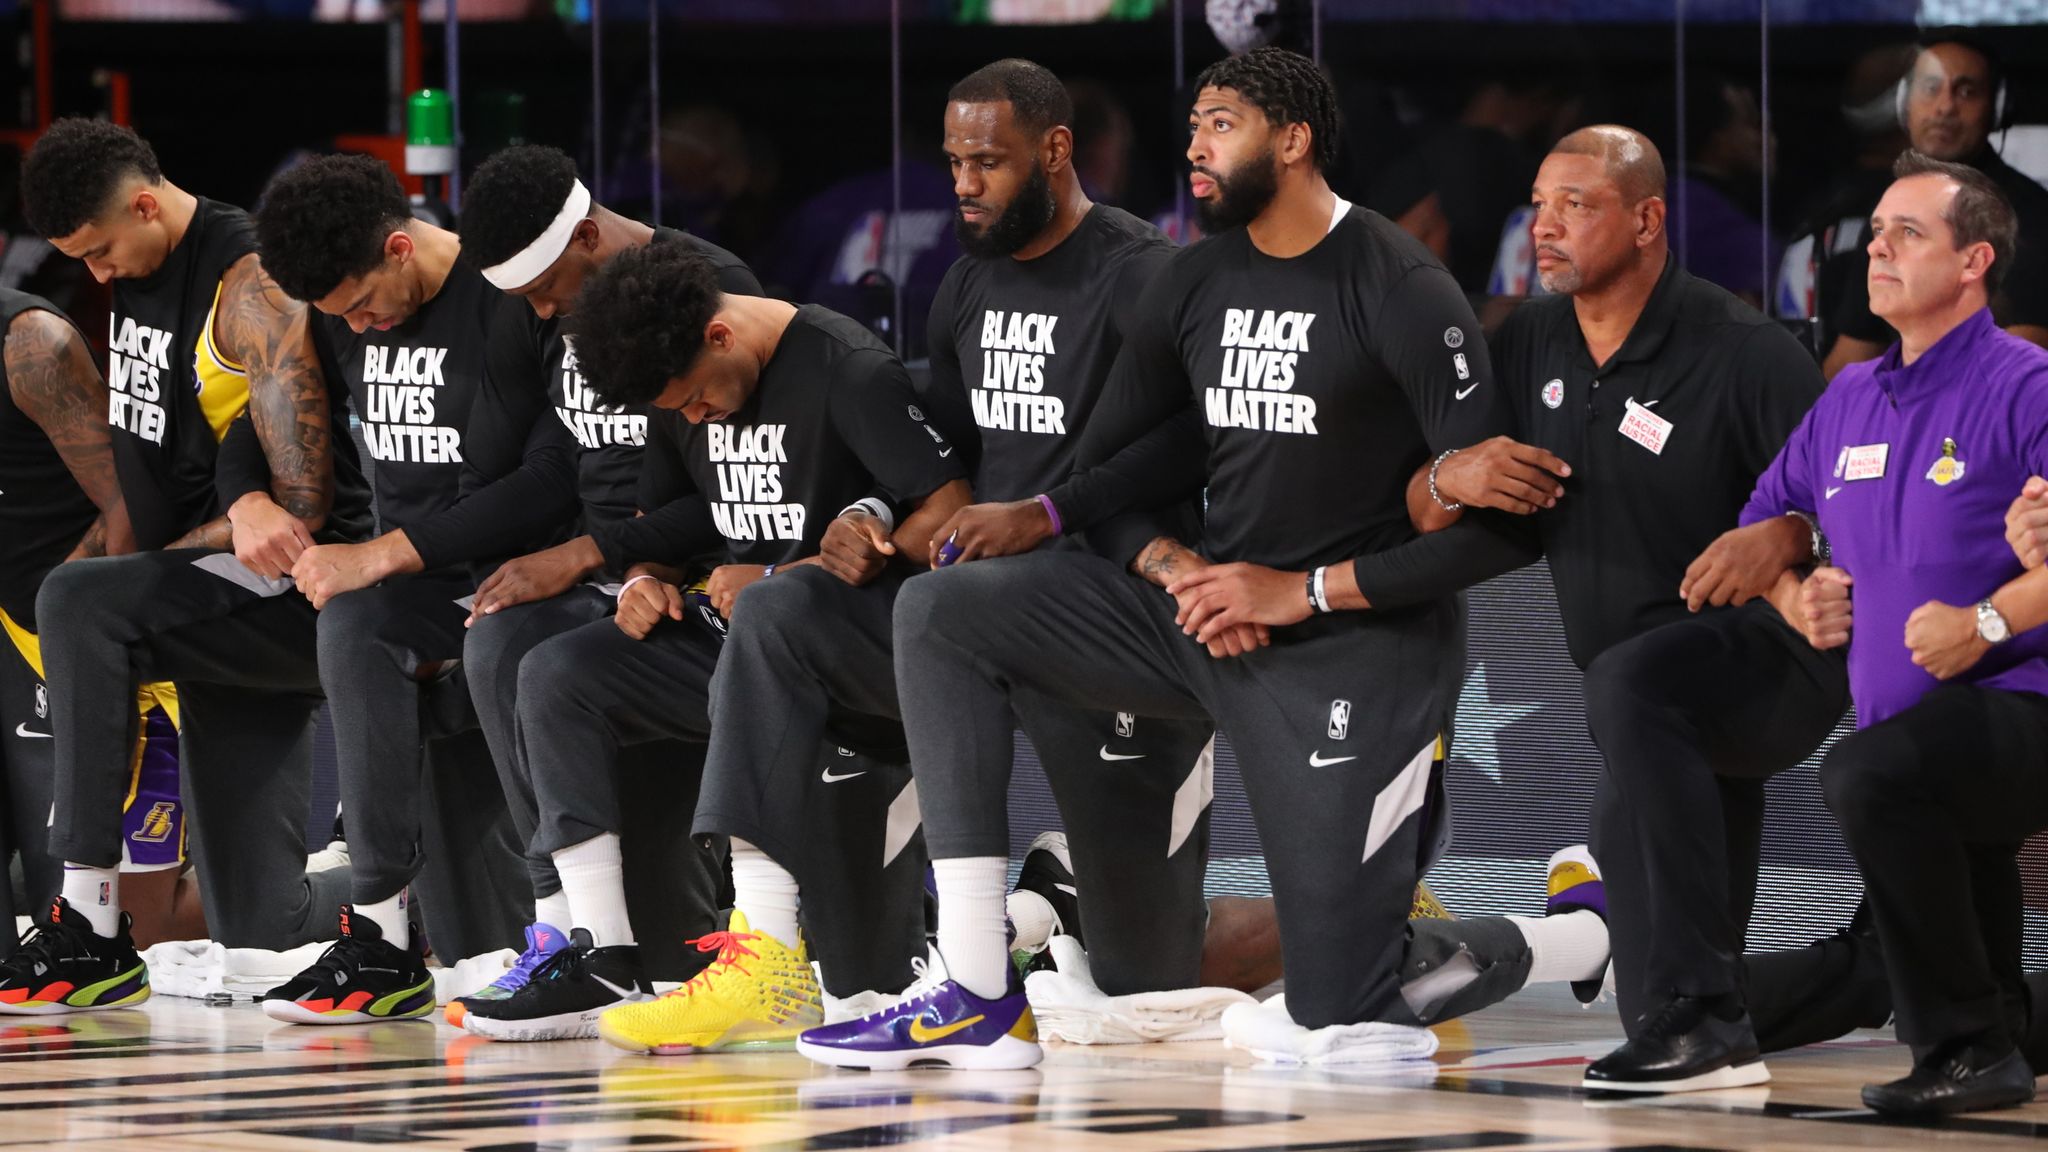 NBA players kneel during anthem | NBA News | Sky Sports